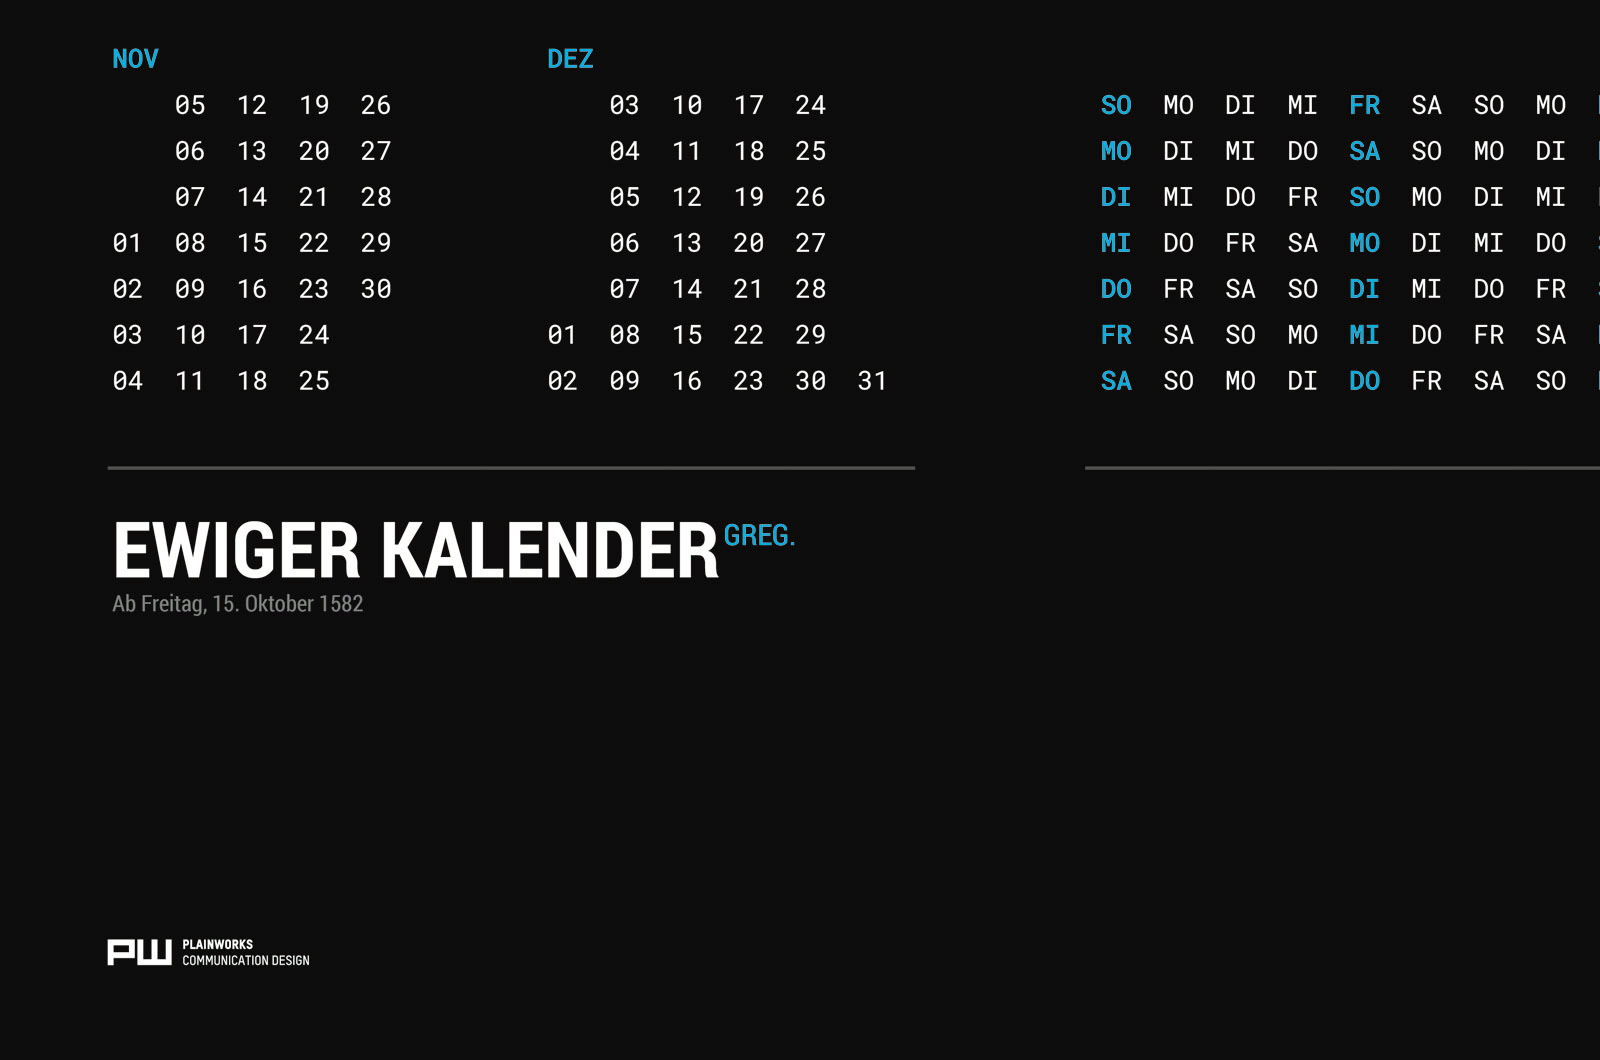 Alexander Glante - Works - Perpetual Calendar